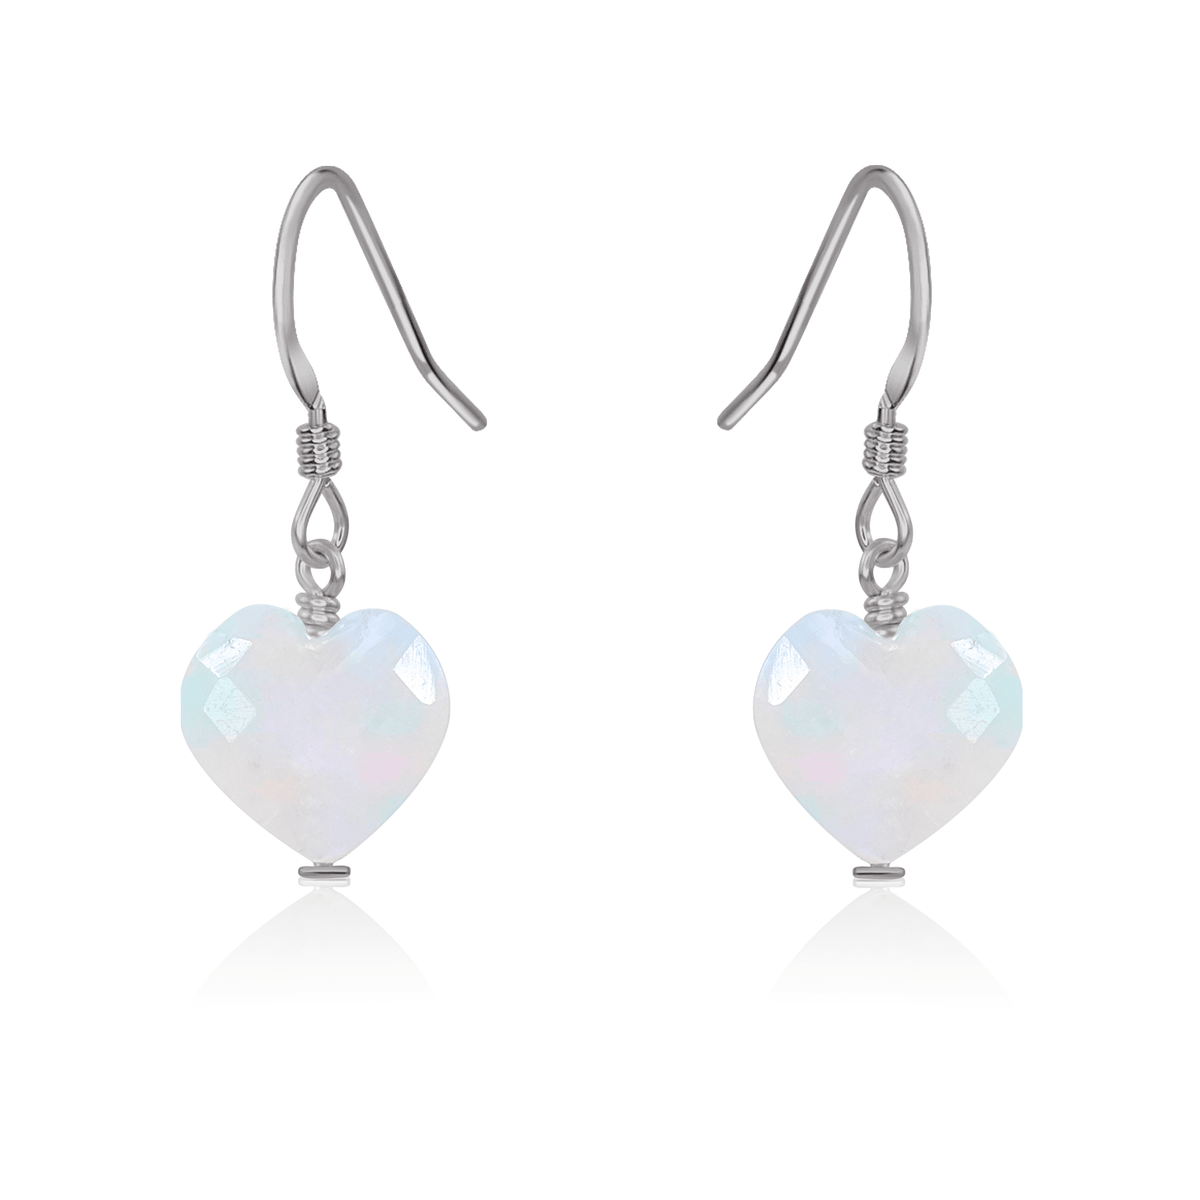 Rainbow Moonstone Crystal Heart Dangle Earrings - Rainbow Moonstone Crystal Heart Dangle Earrings - Stainless Steel - Luna Tide Handmade Crystal Jewellery